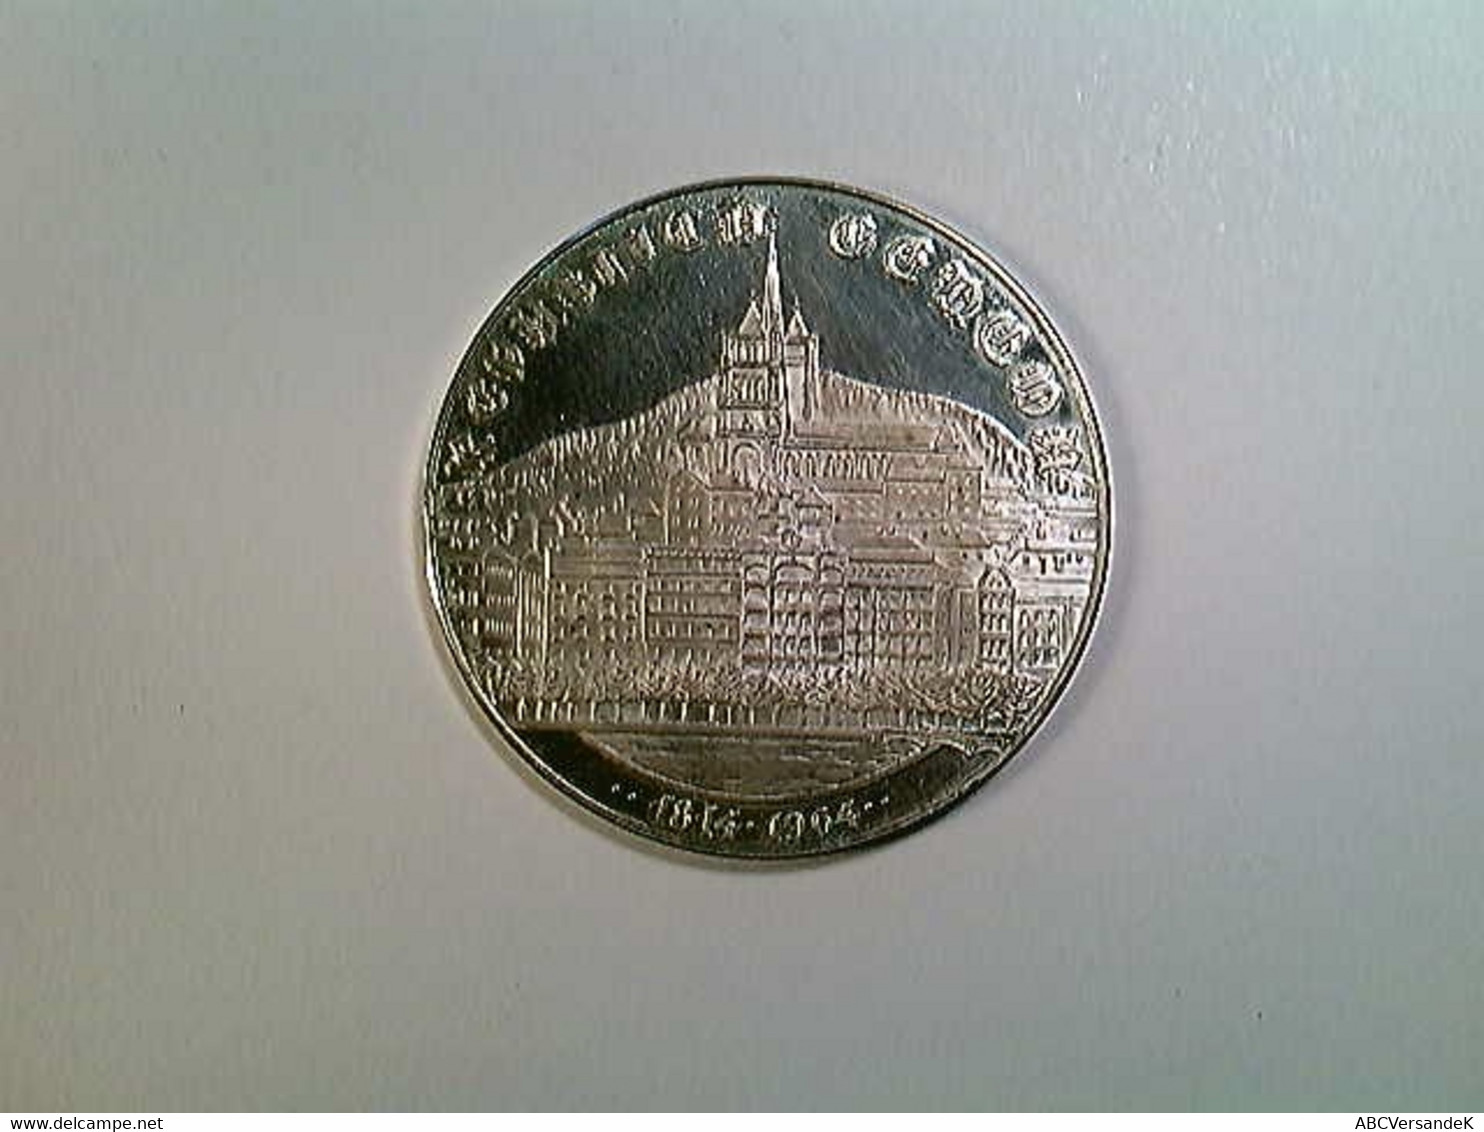 Münze Republica Geneva 1814-1964, Schweiz Kantonalmünze, Argor, Silber, SELTEN! - Numismatique